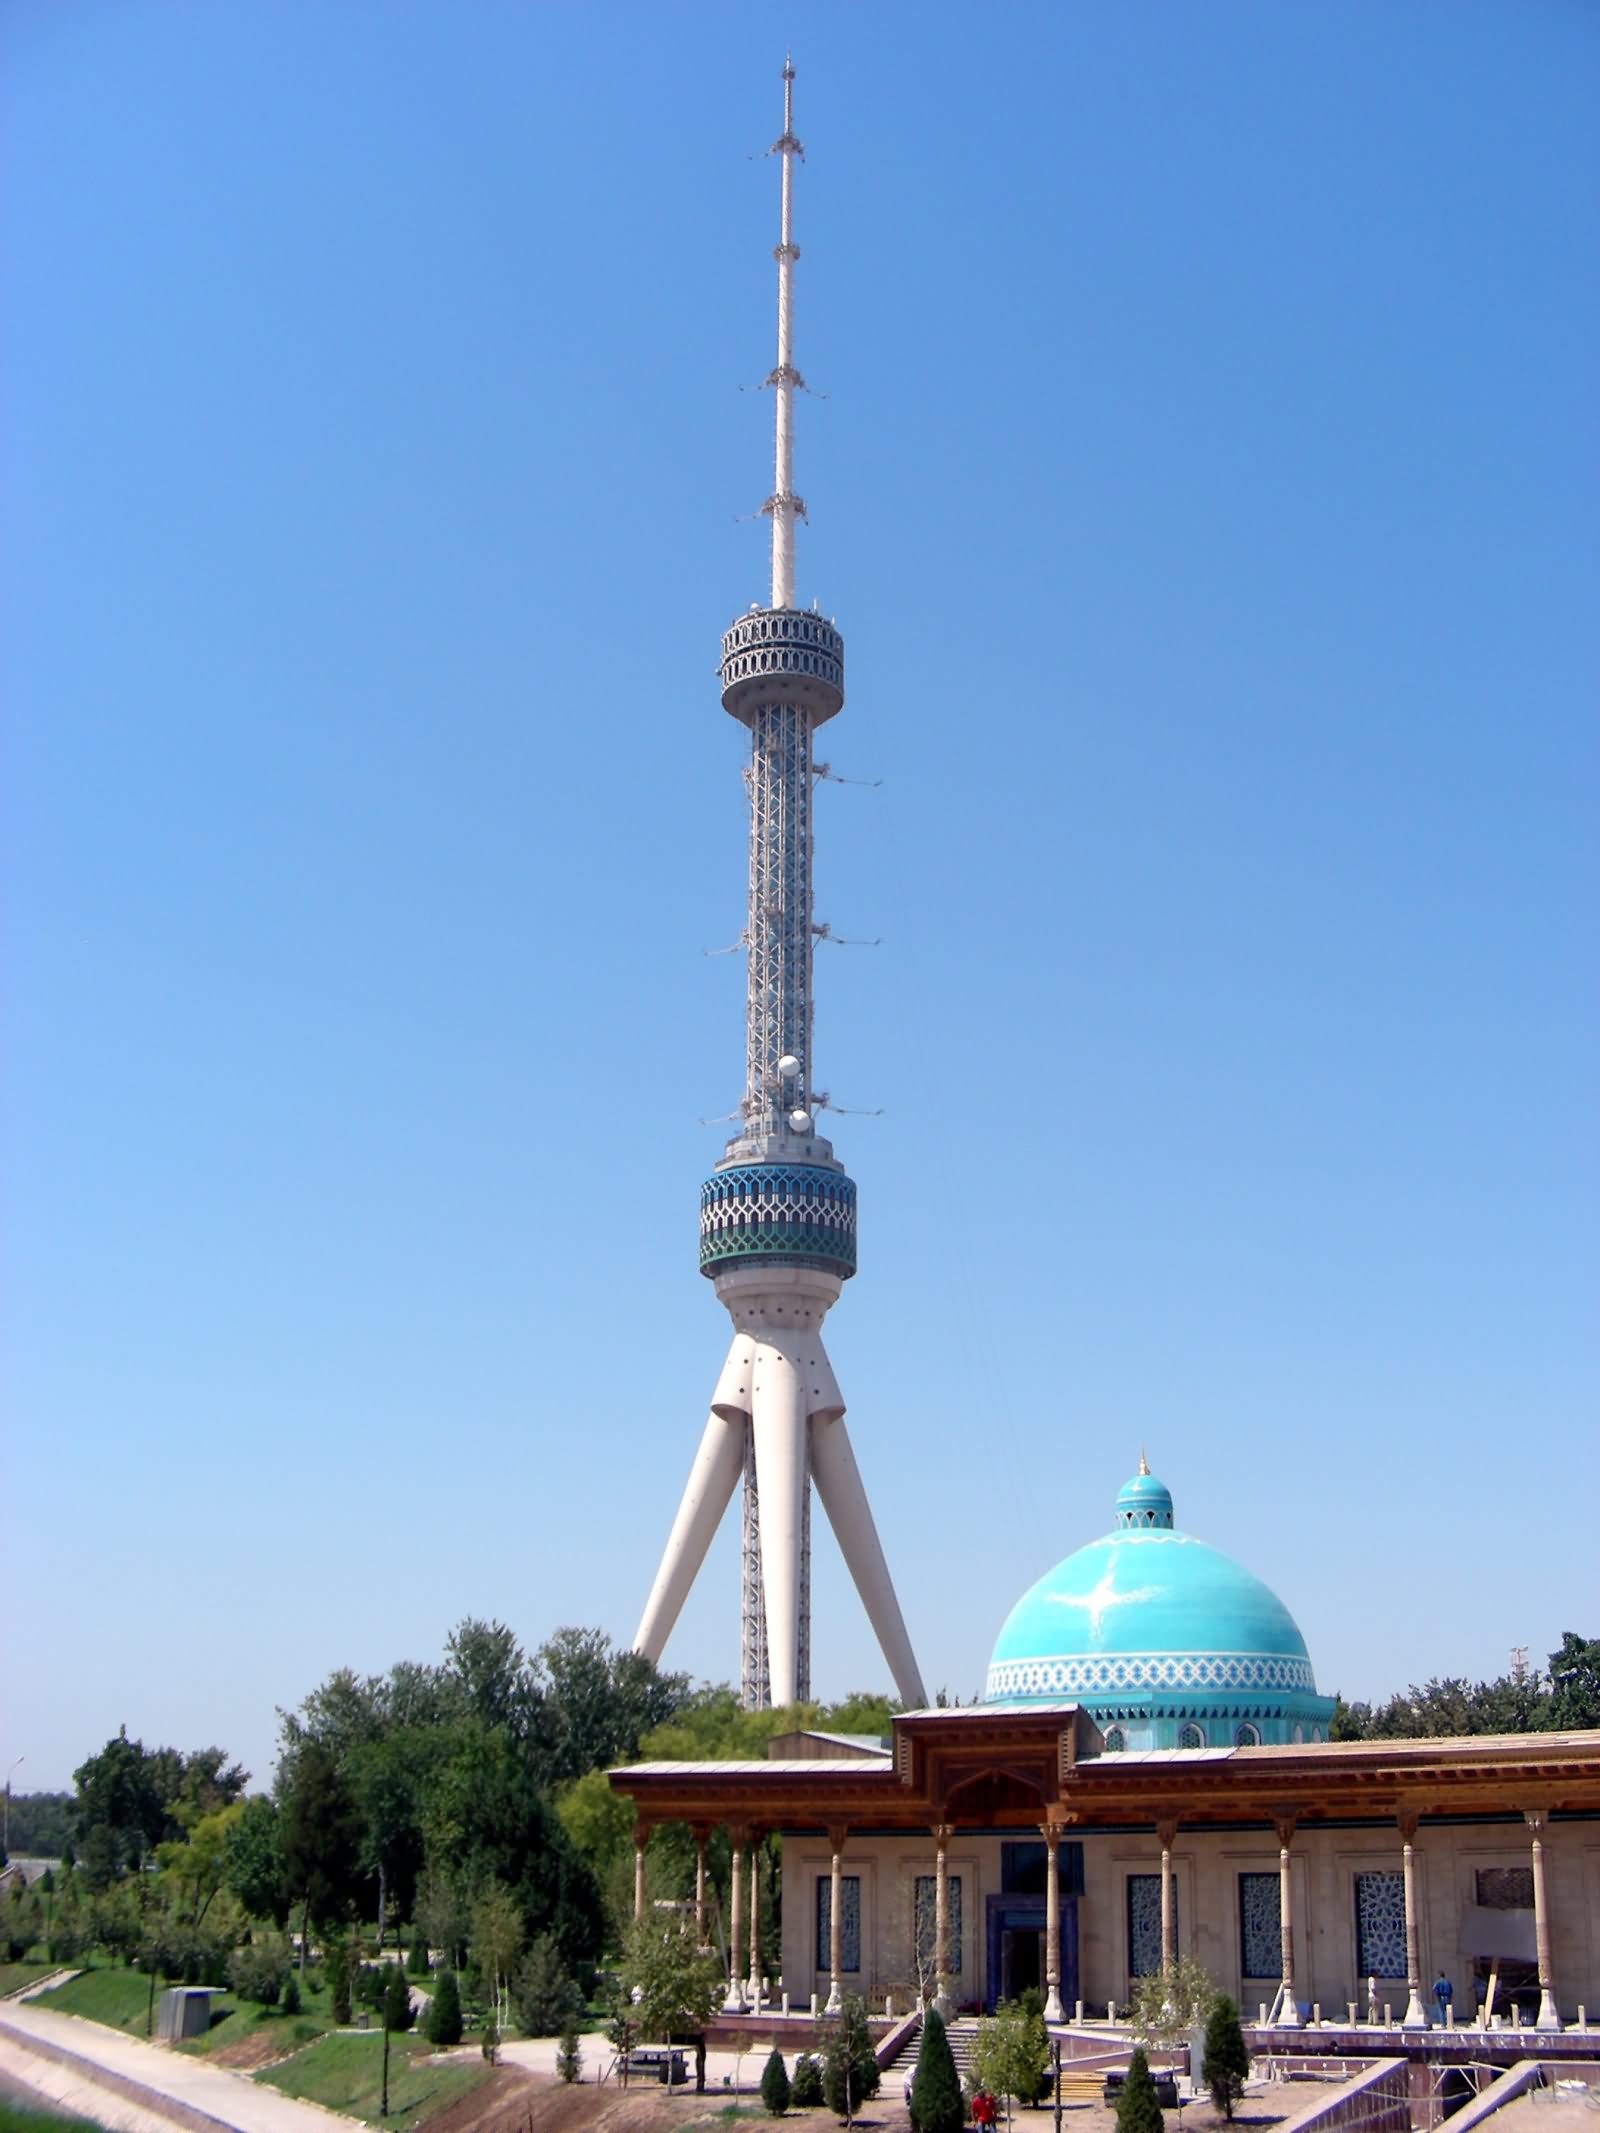 The Tashkent TV Tower Picture